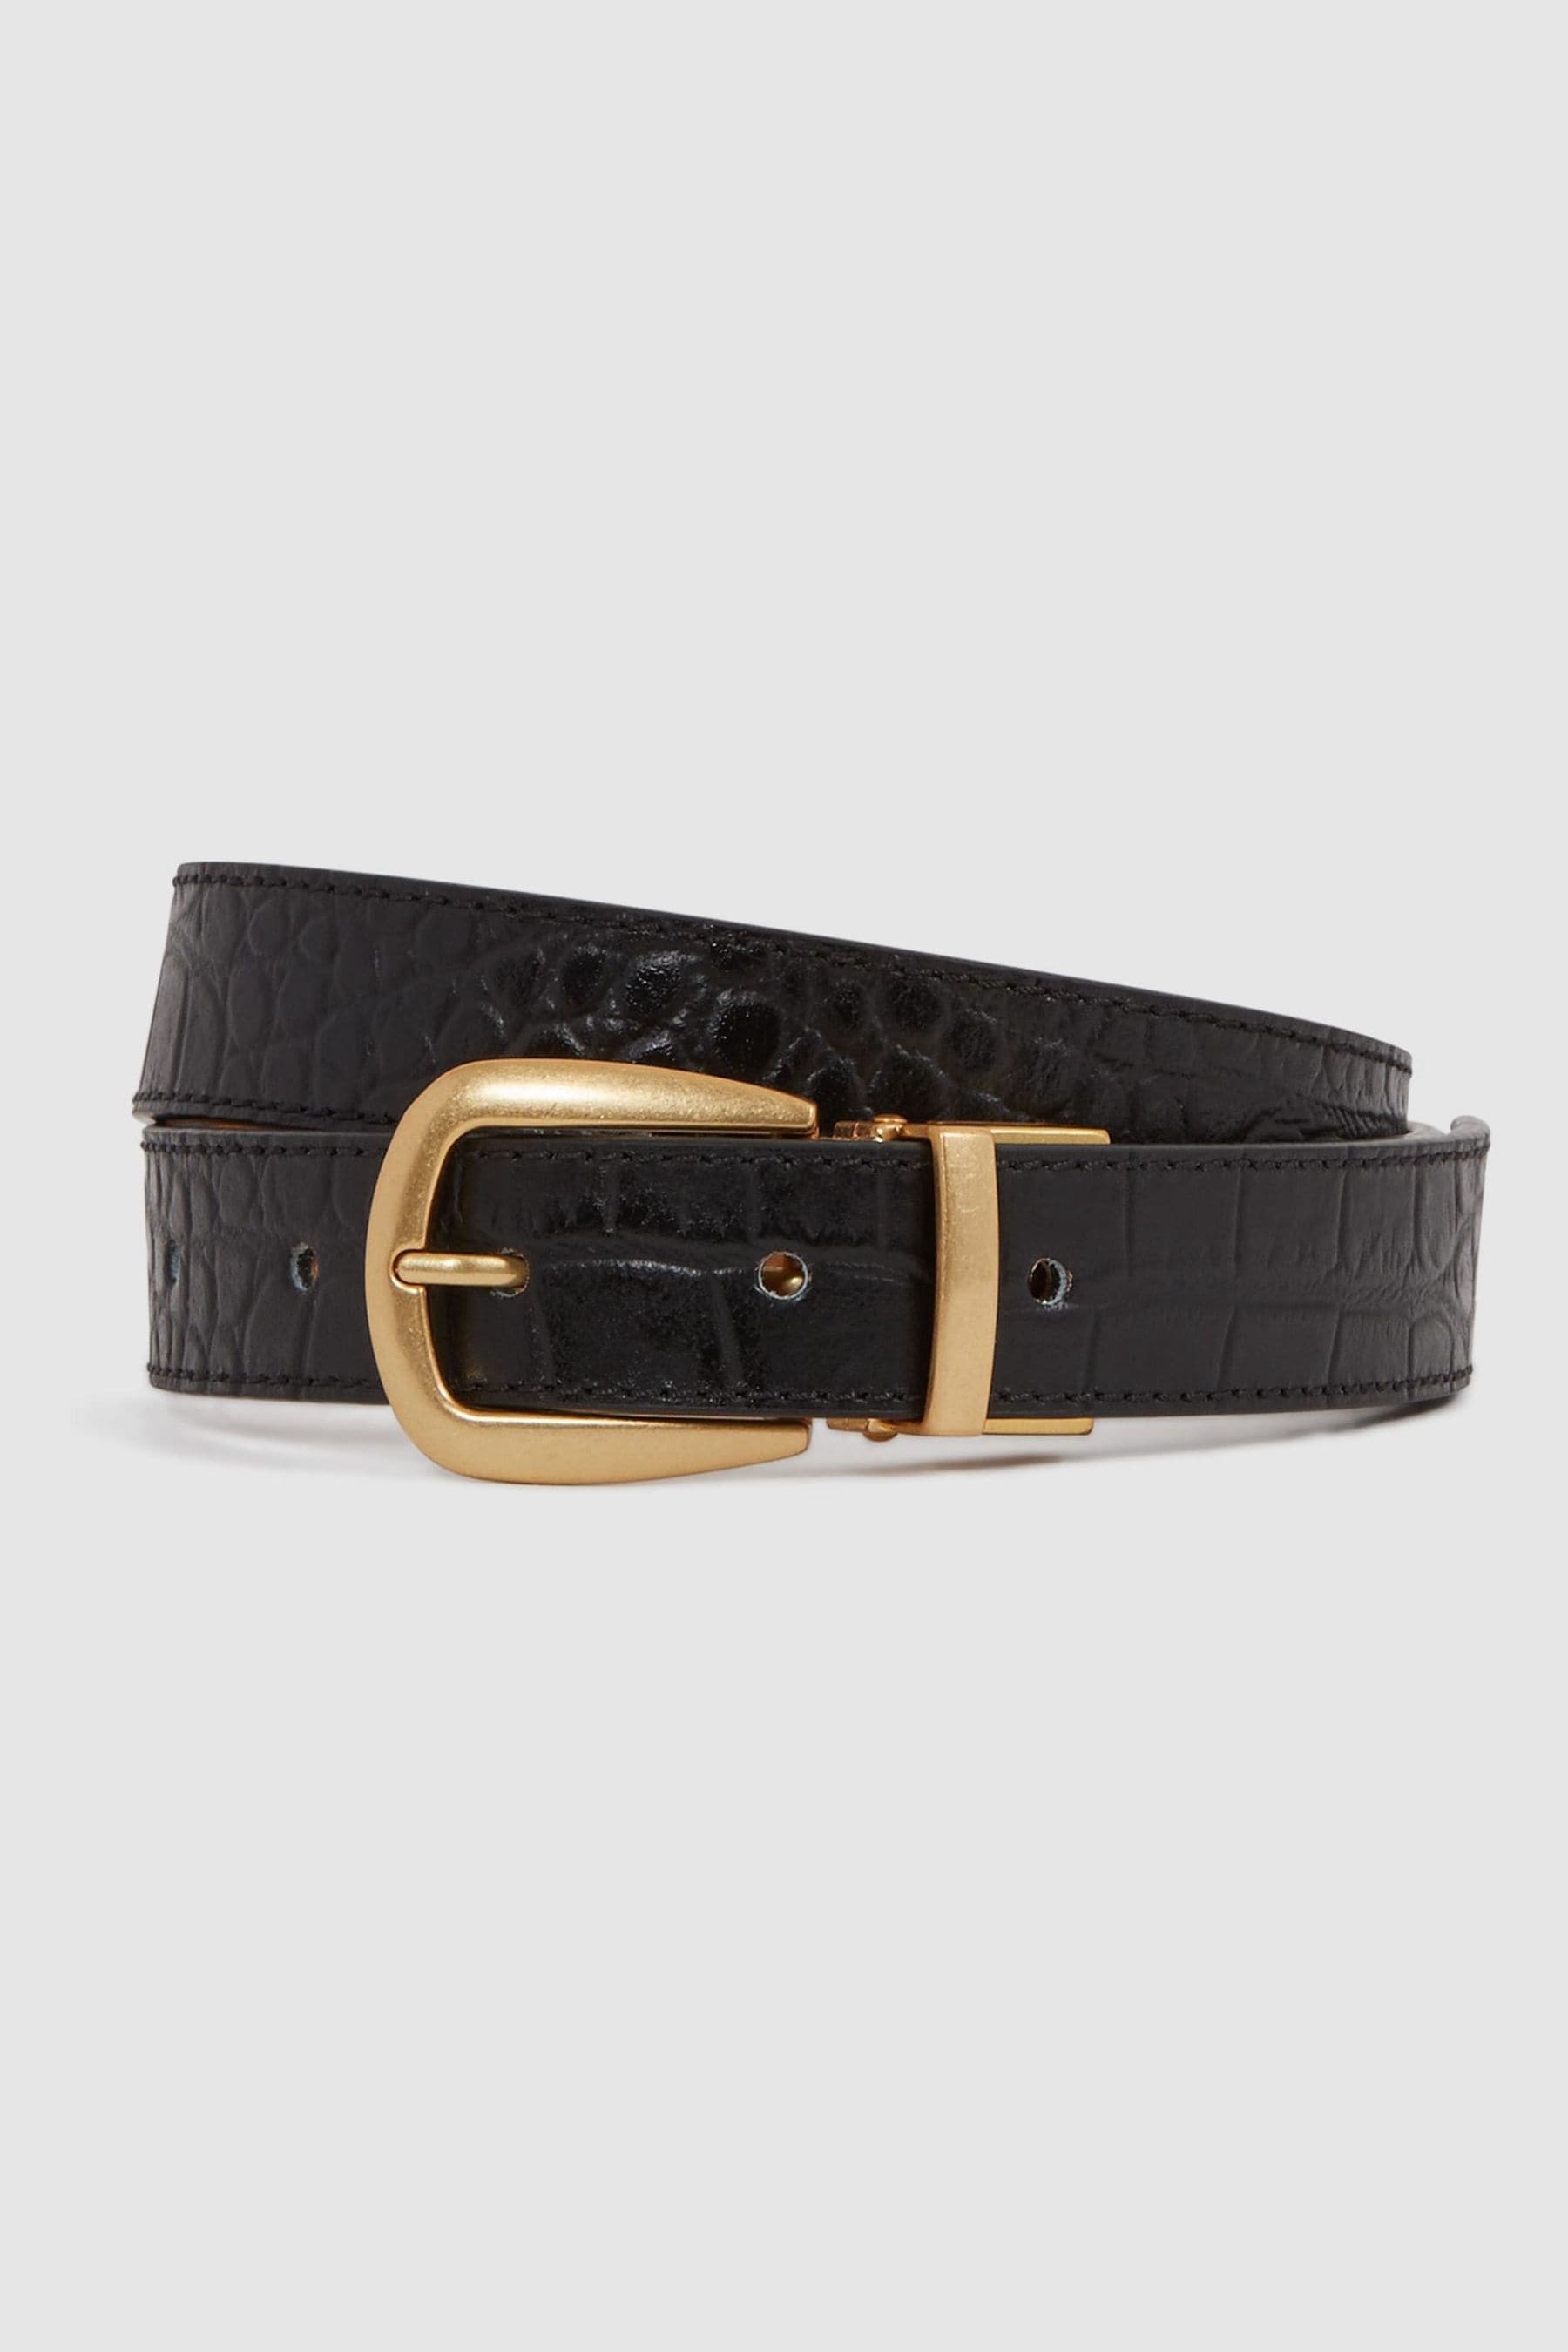 Reiss Madison - Black/camel Madison Reversible Leather Belt, M